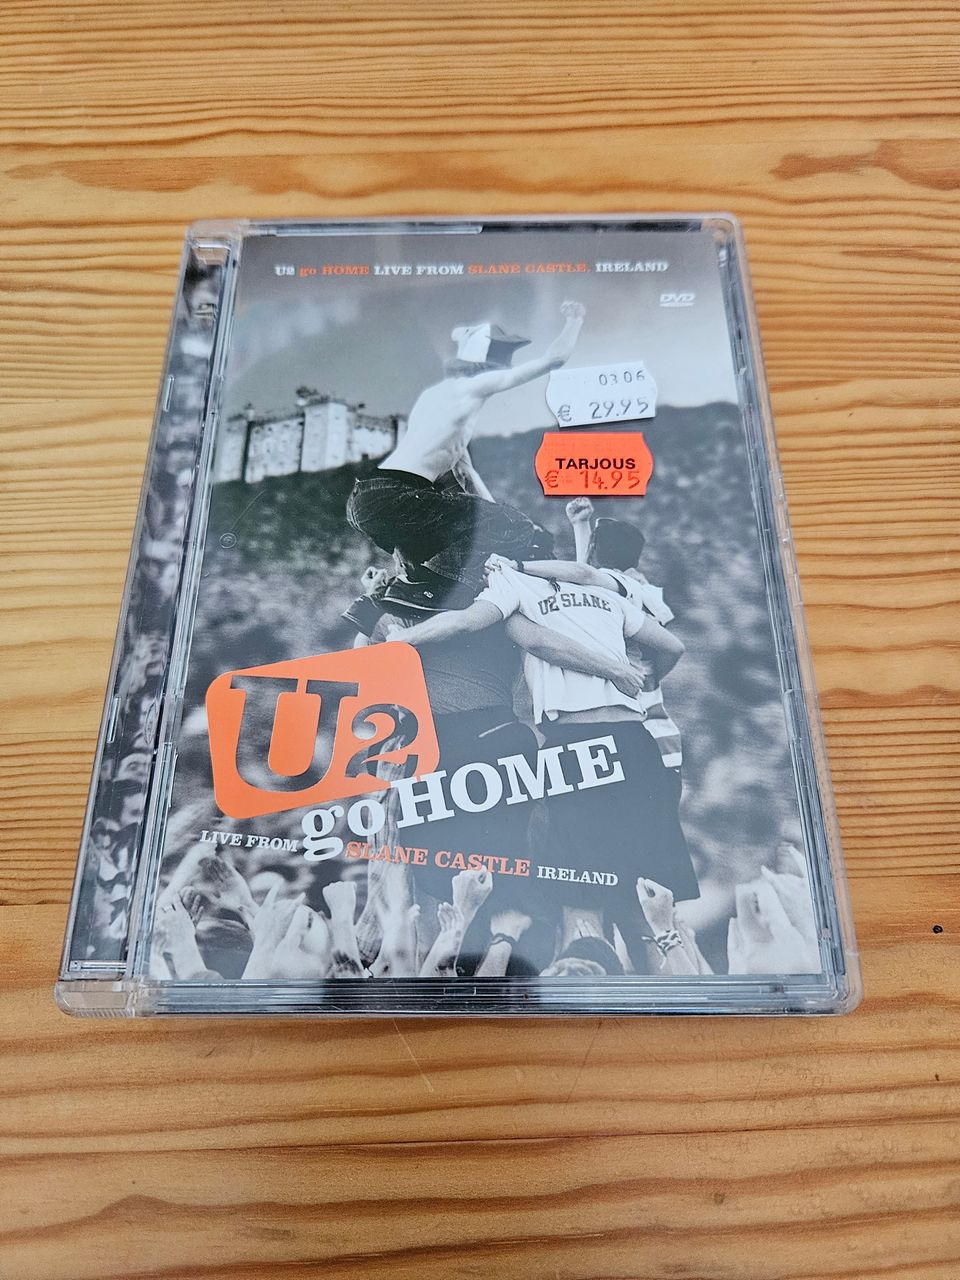 U2 go home: Live from Slane castle